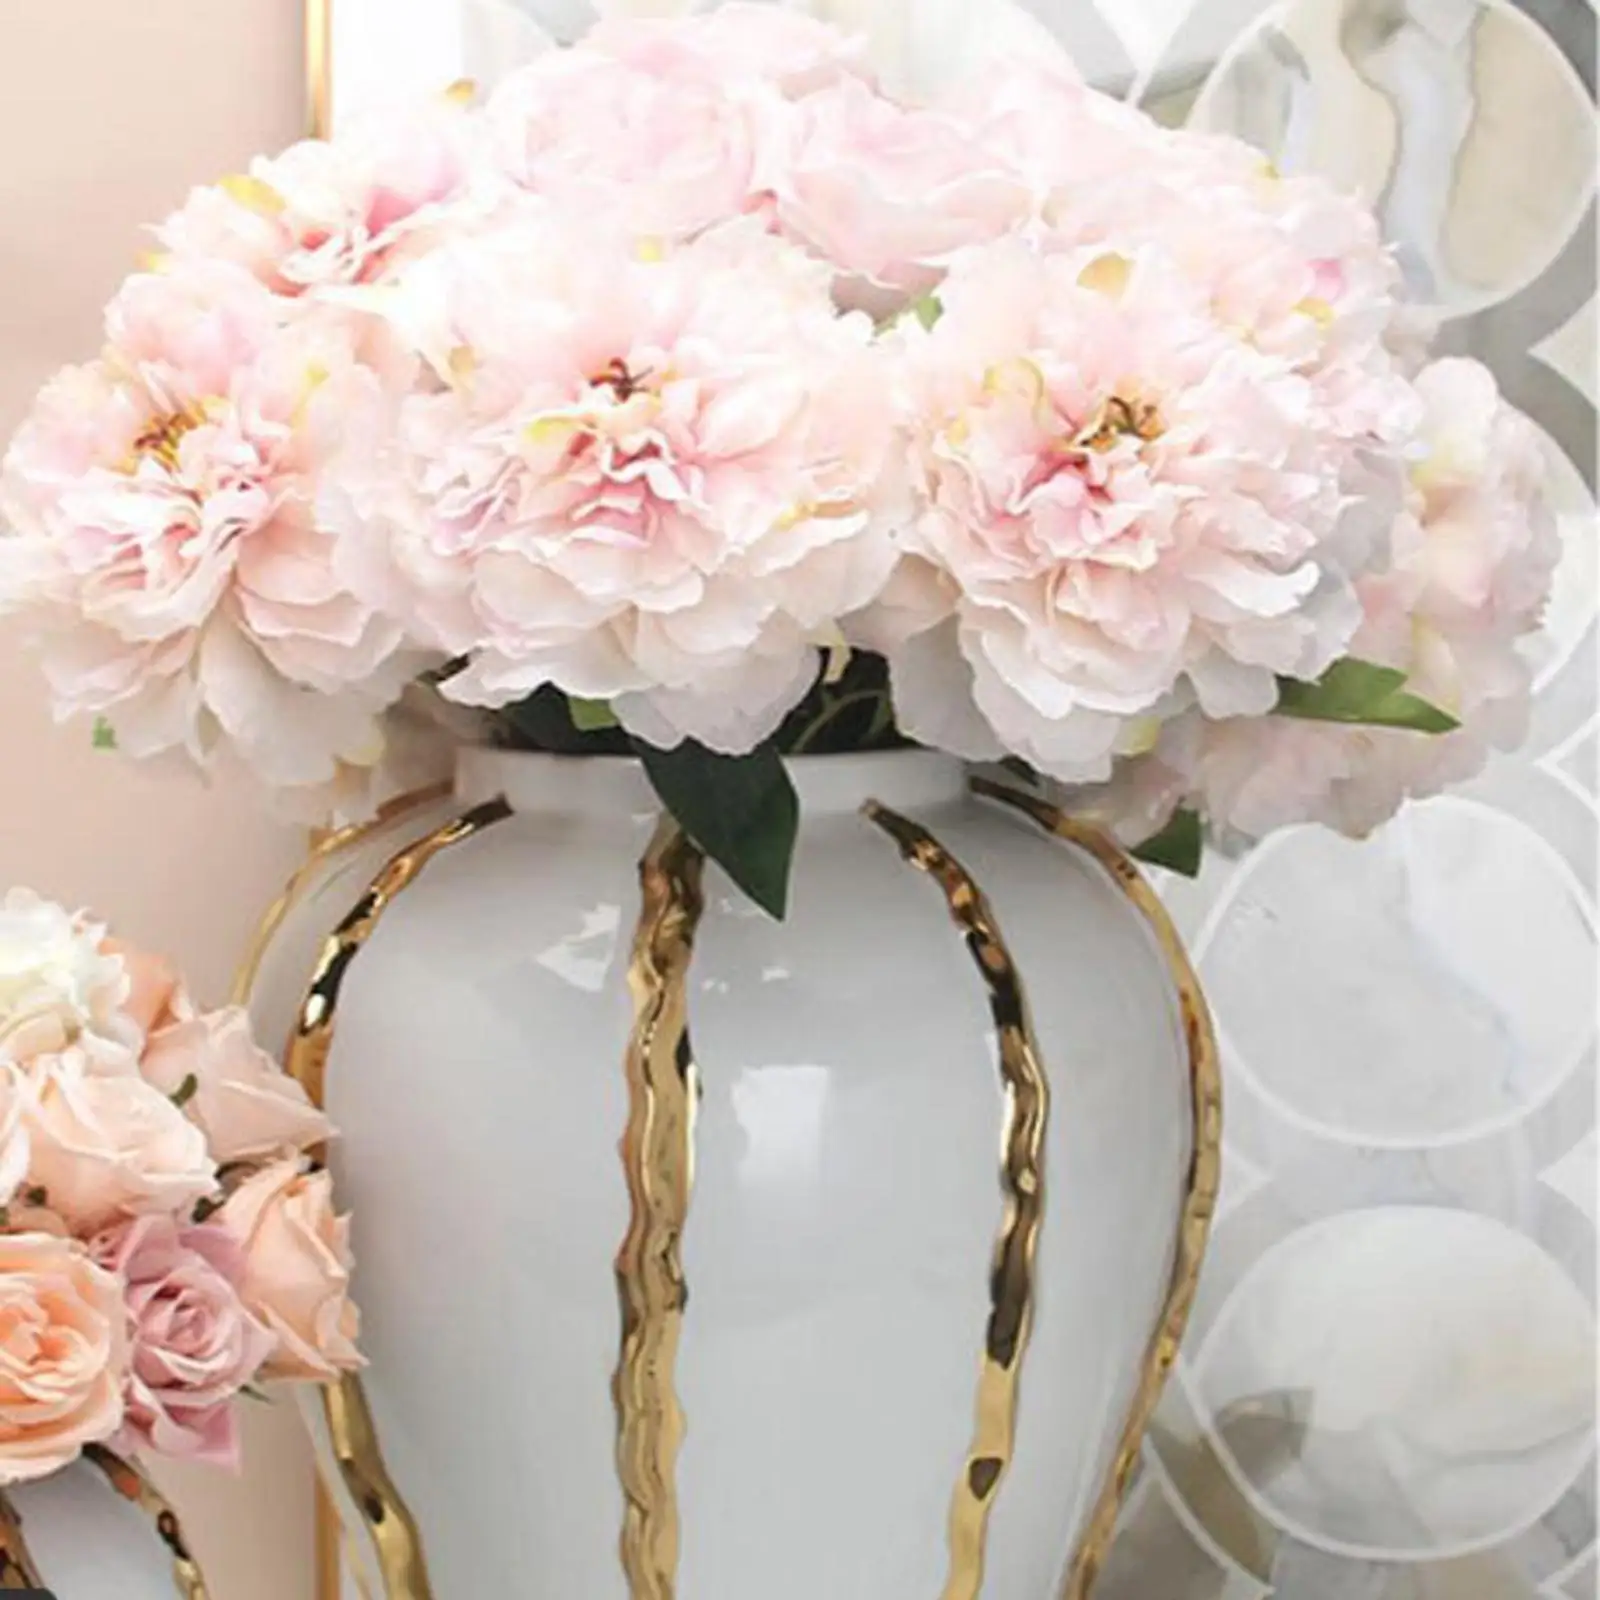 Ceramic Vase Chinese Style Display Delicate Organizer Porcelain Ginger Jar for Home Bedroom Floral Arrangement Office Collection